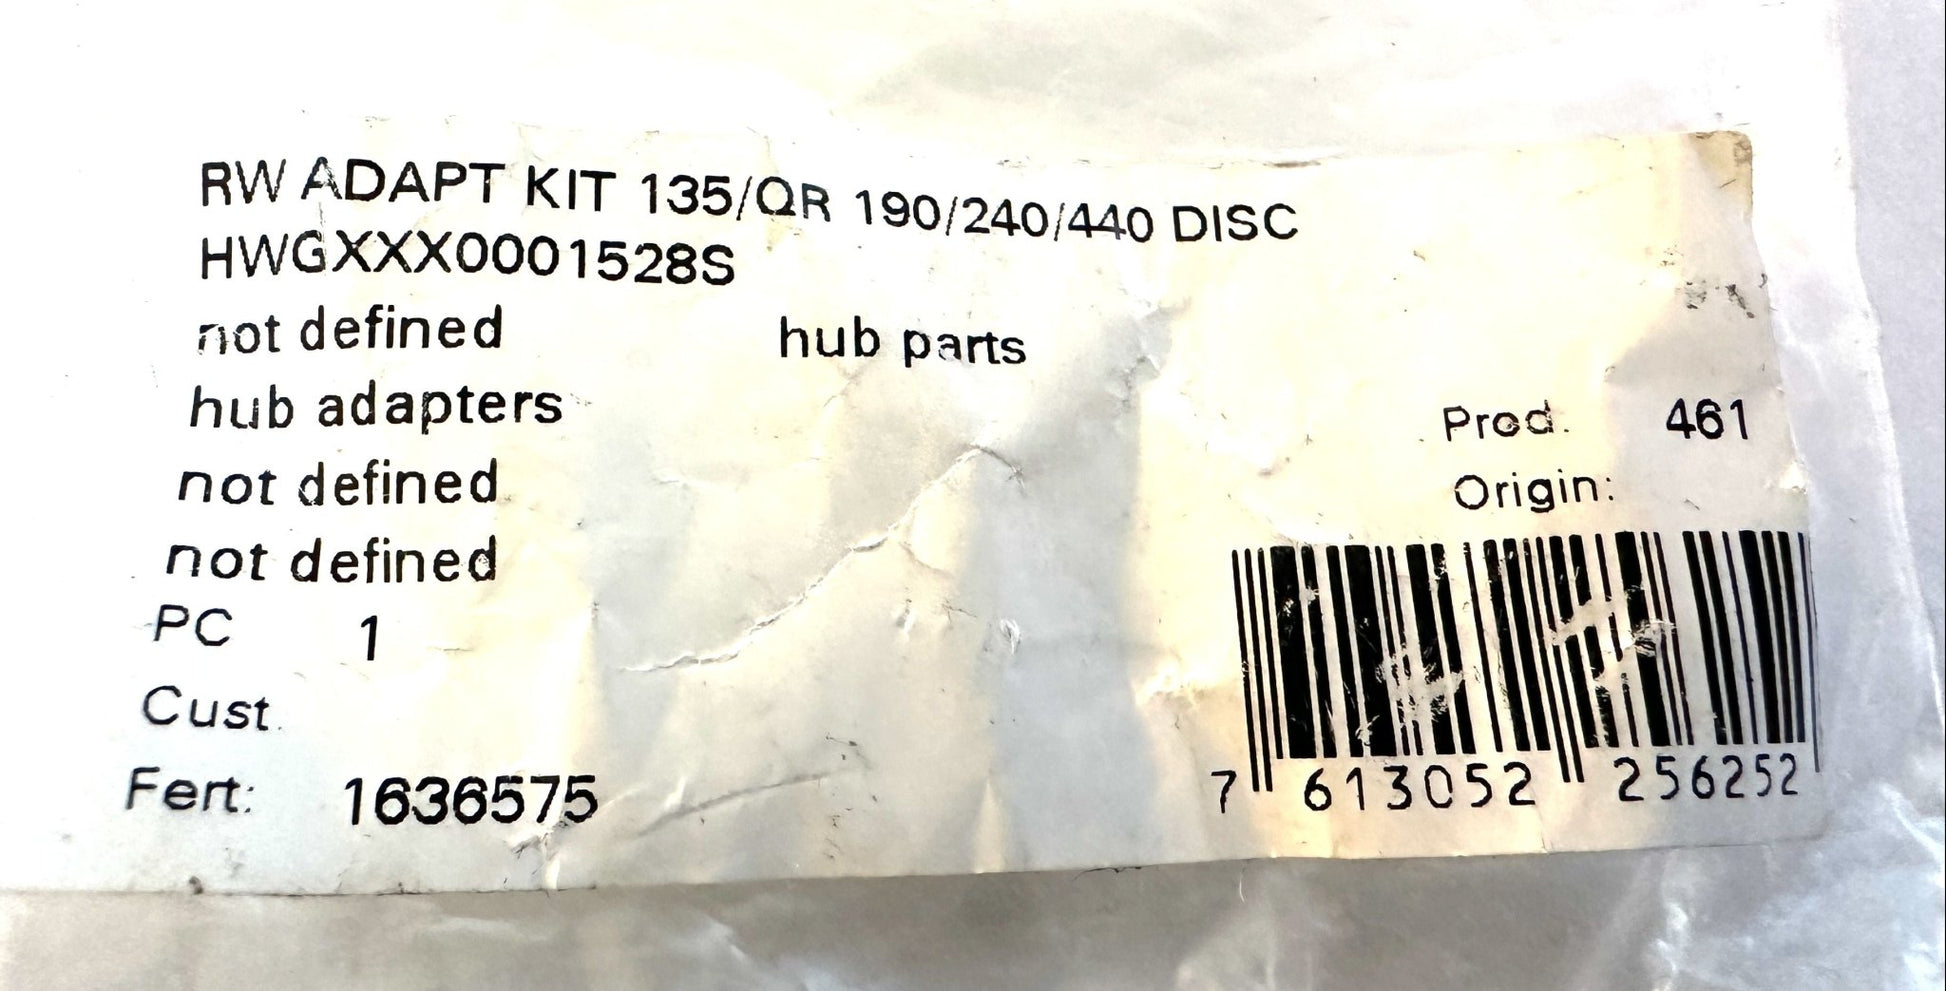 DT Swiss Rear End Caps - QR x 135/142mm For Hub 7613052256252 New - Random Bike Parts